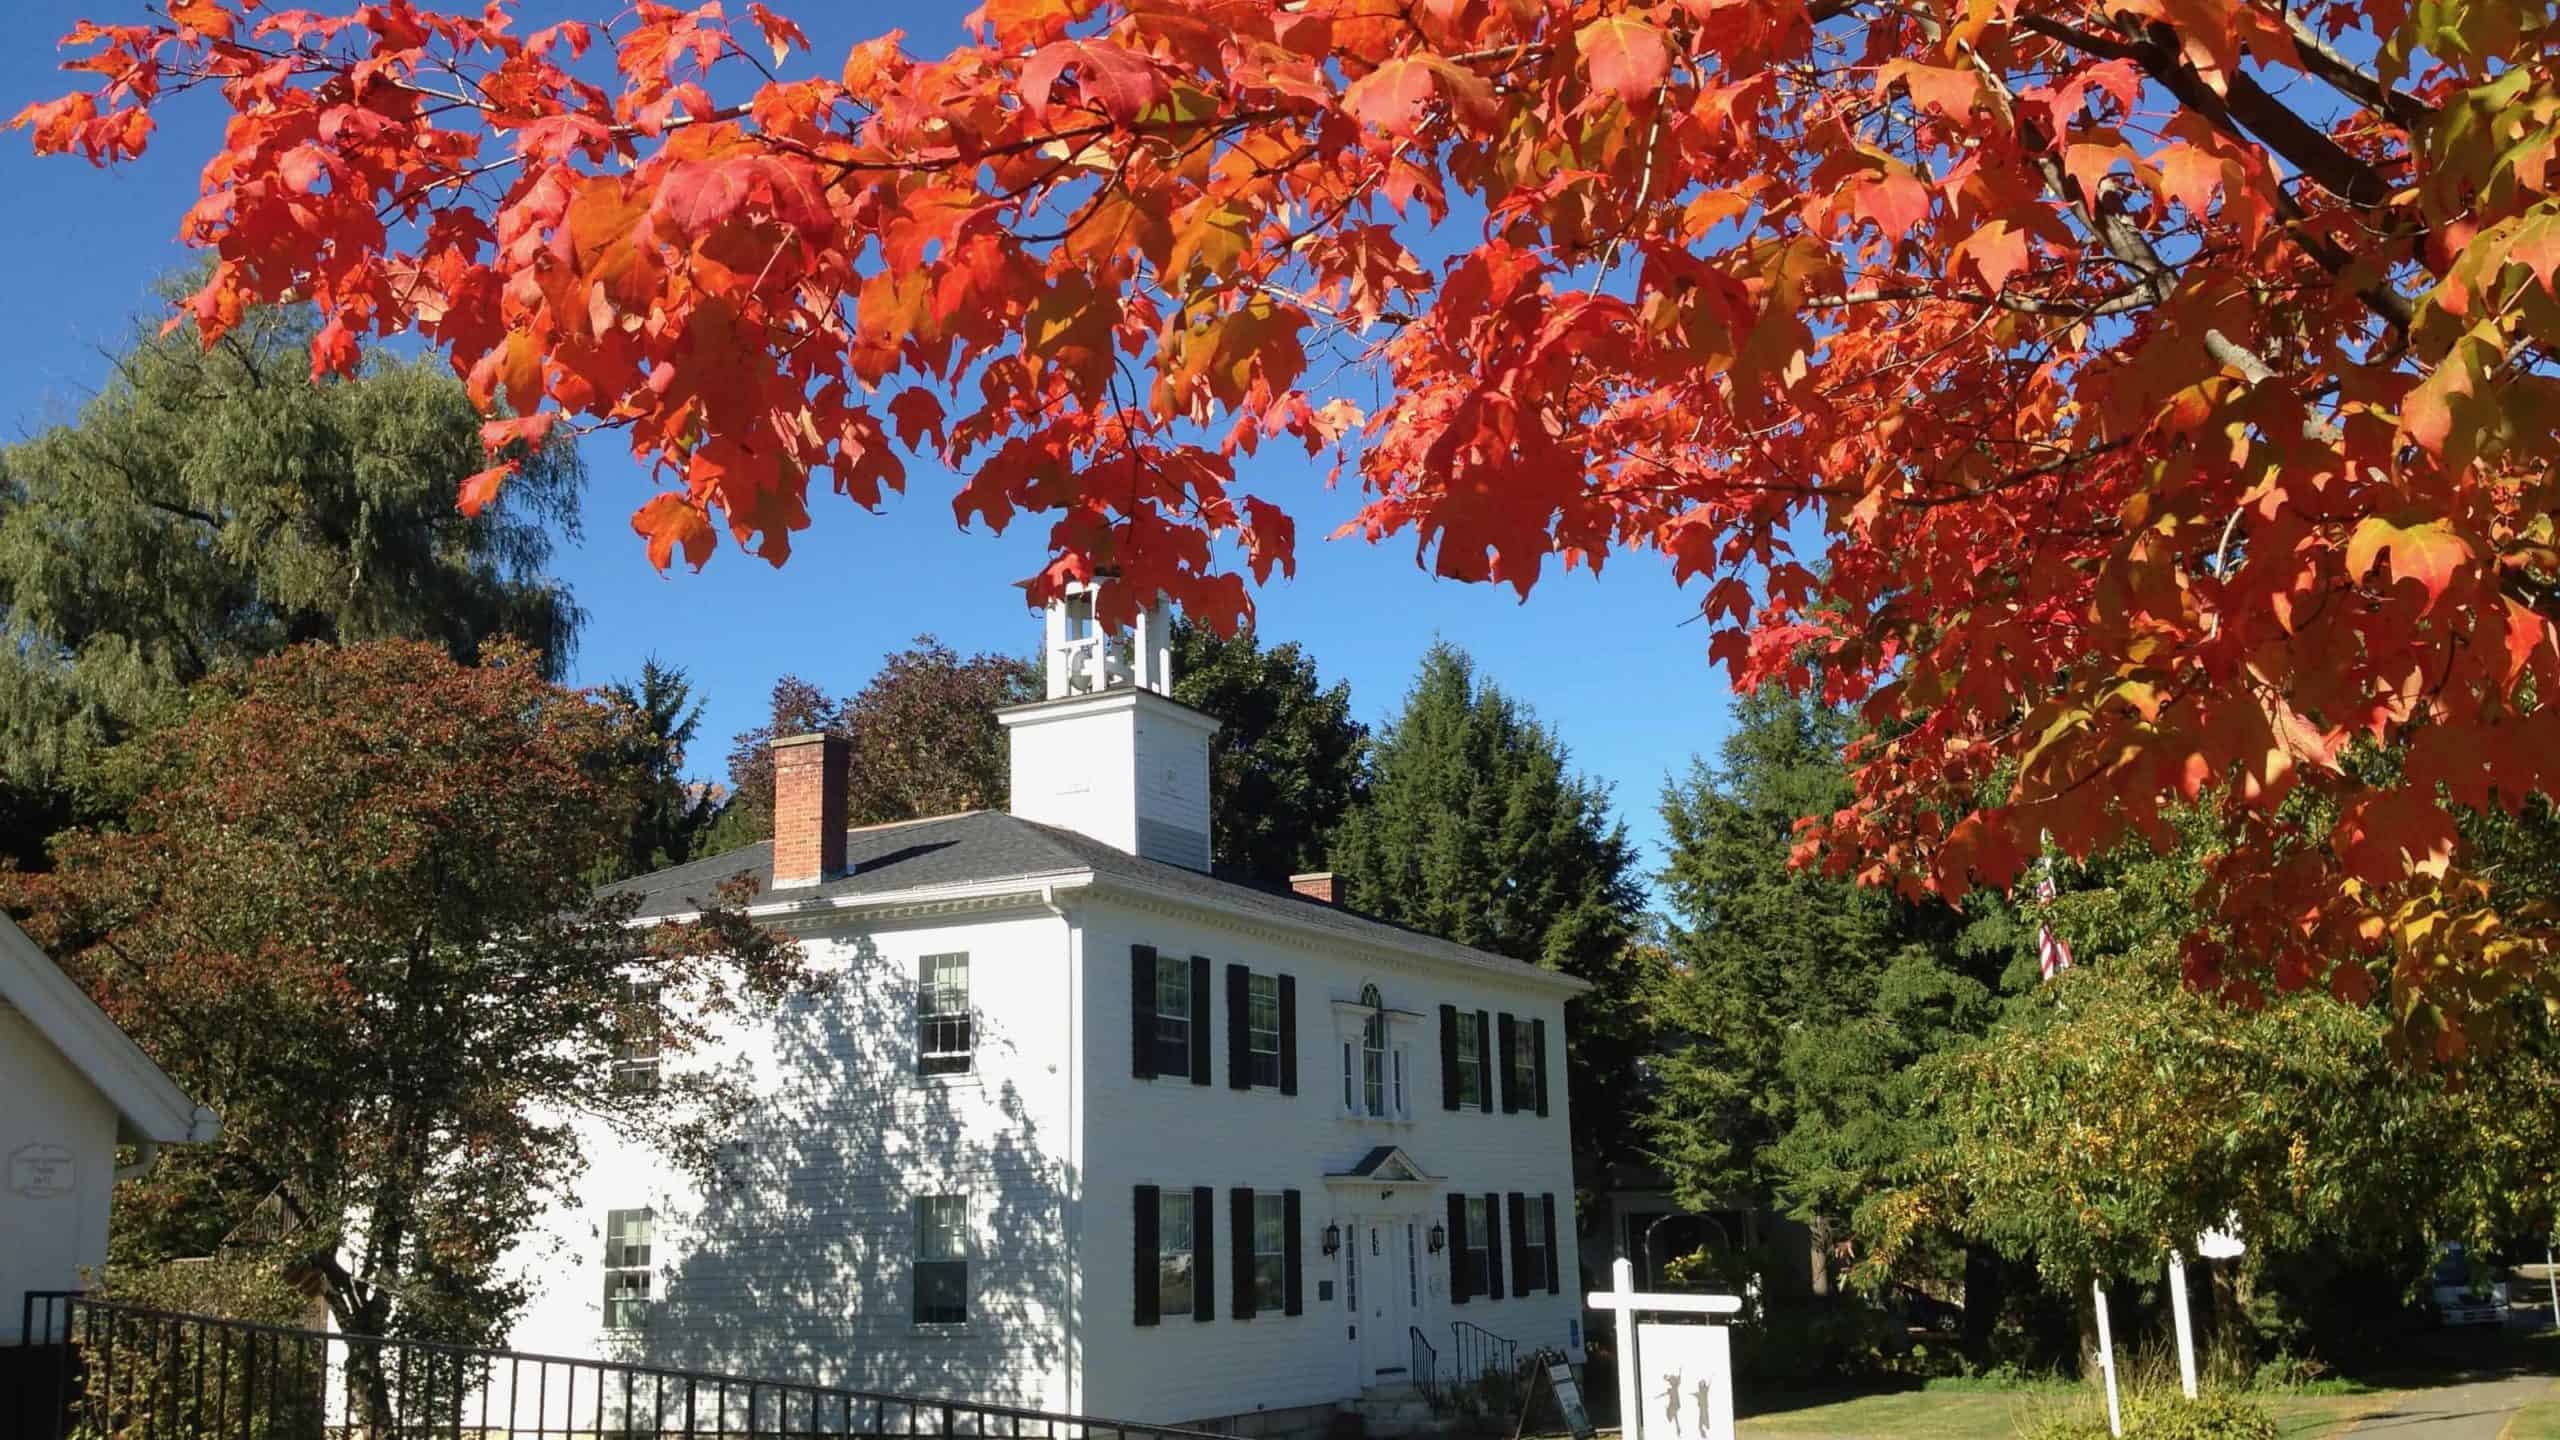 A sugar maple shows color near the historic Lenox Academy Building on a sunny fall day.